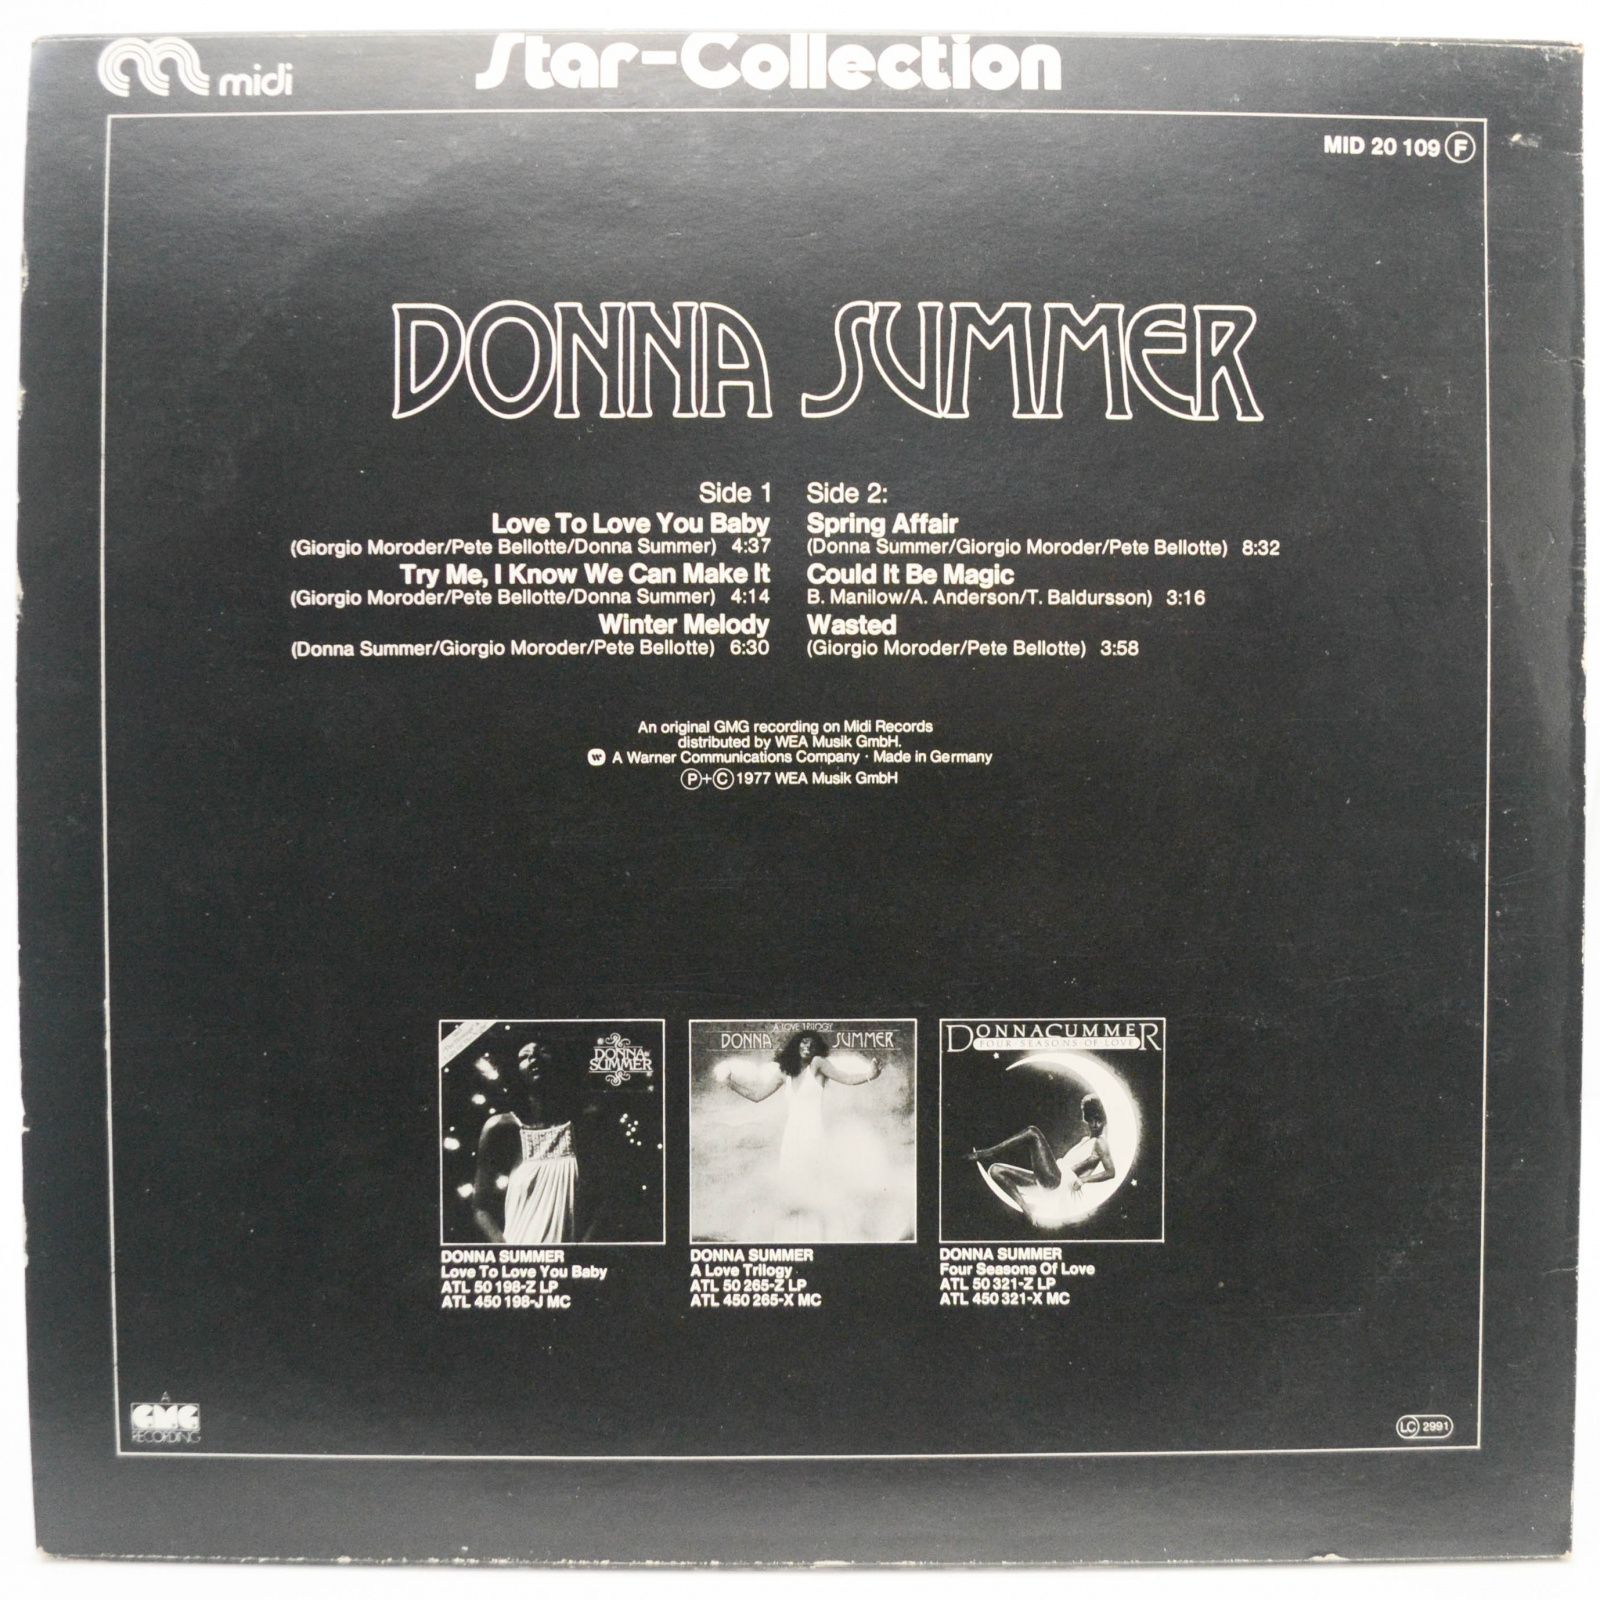 Donna Summer — Star-Collection, 1977